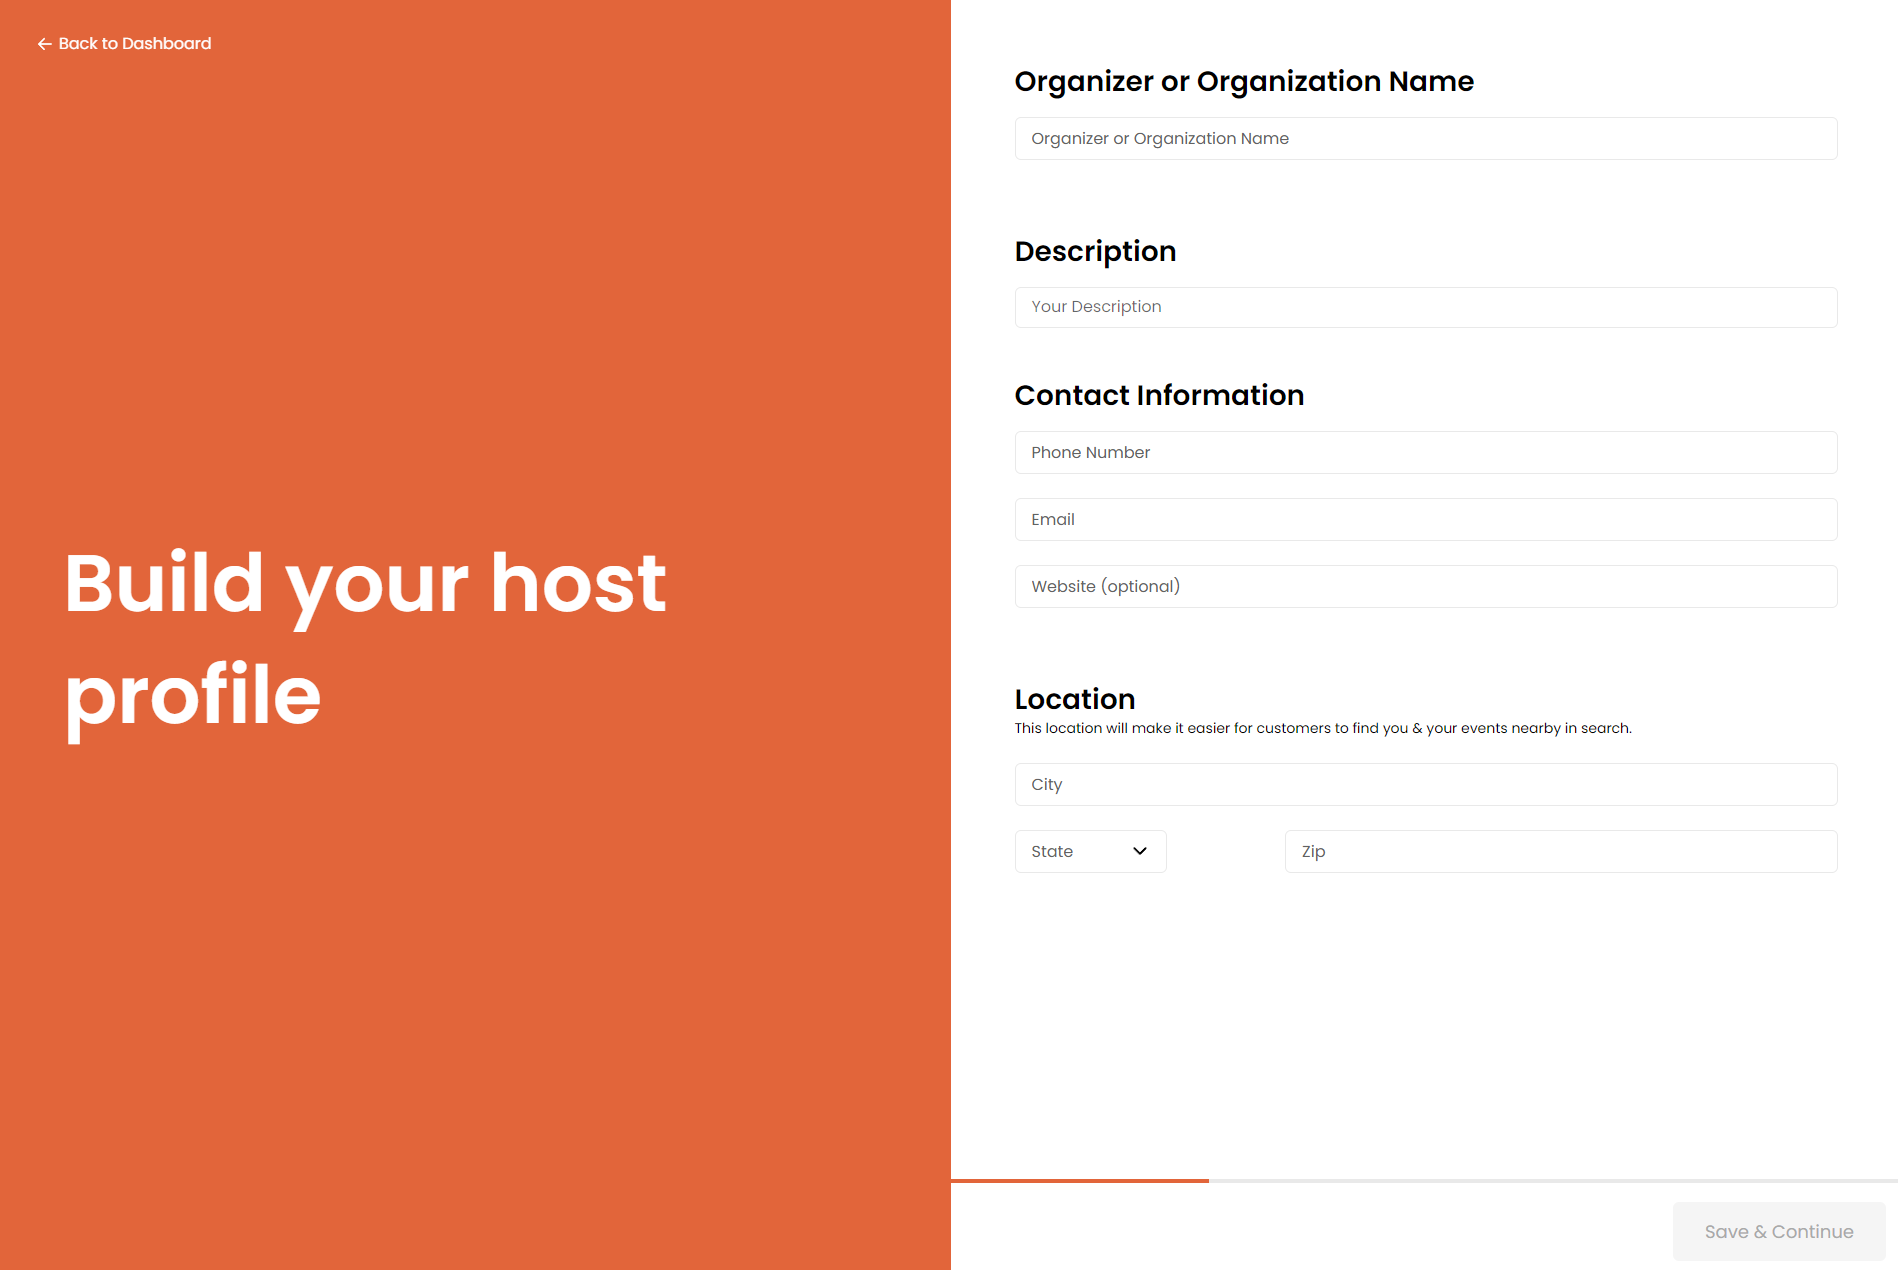 Build your host profile!